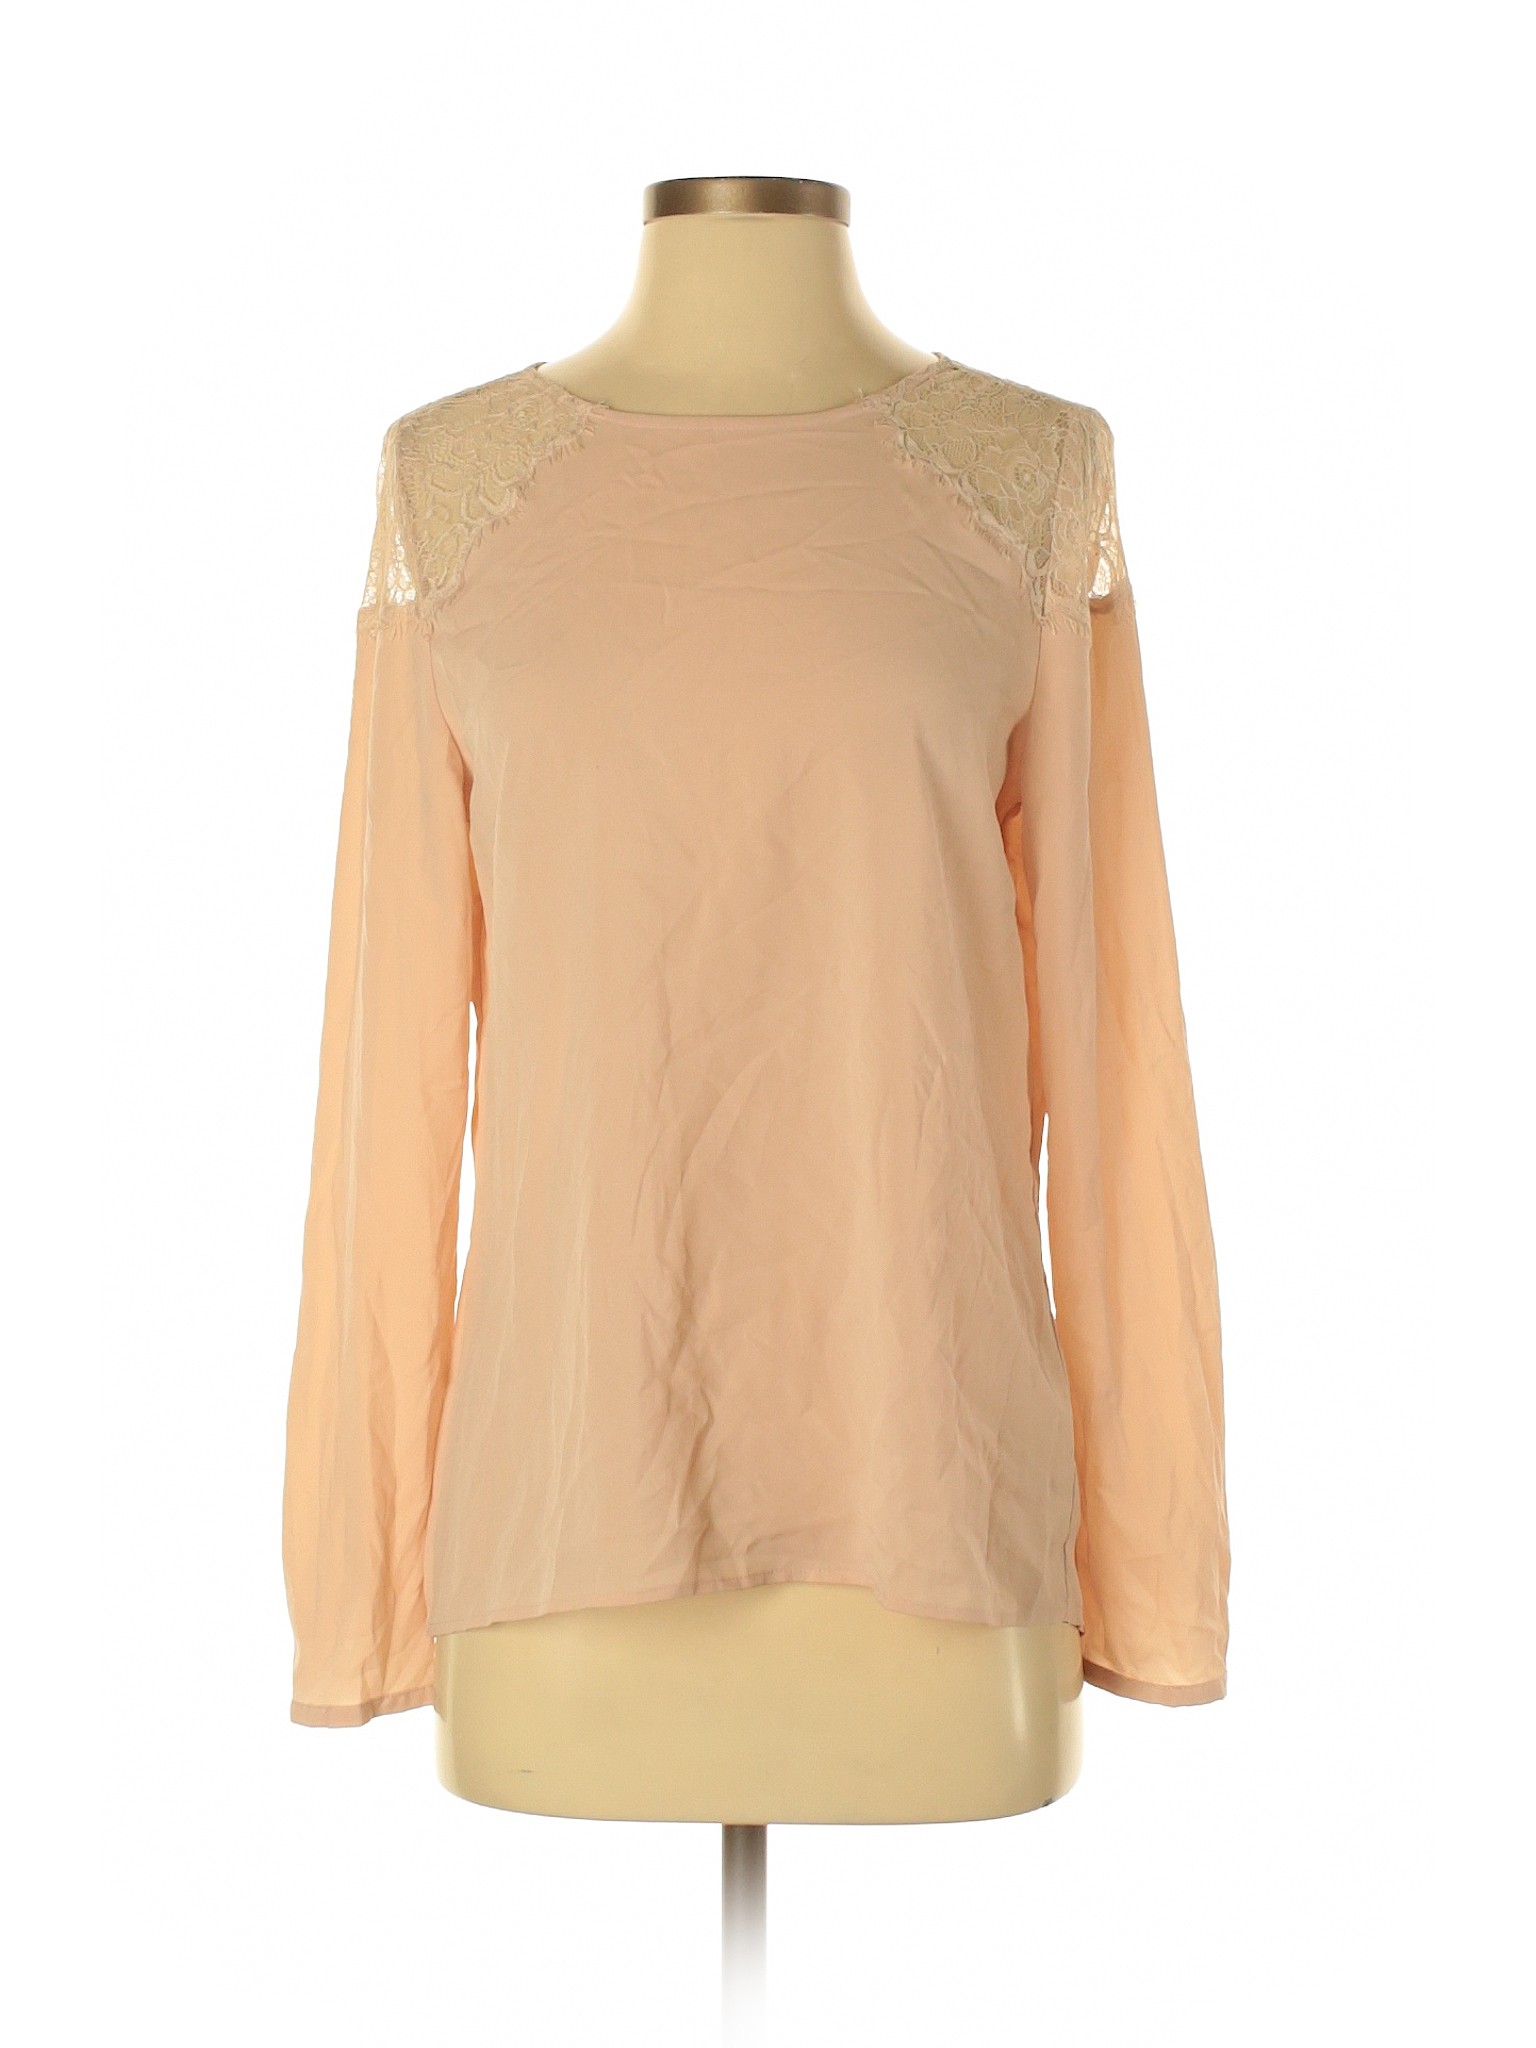 Paraphrase Women Brown Long Sleeve Blouse S | eBay